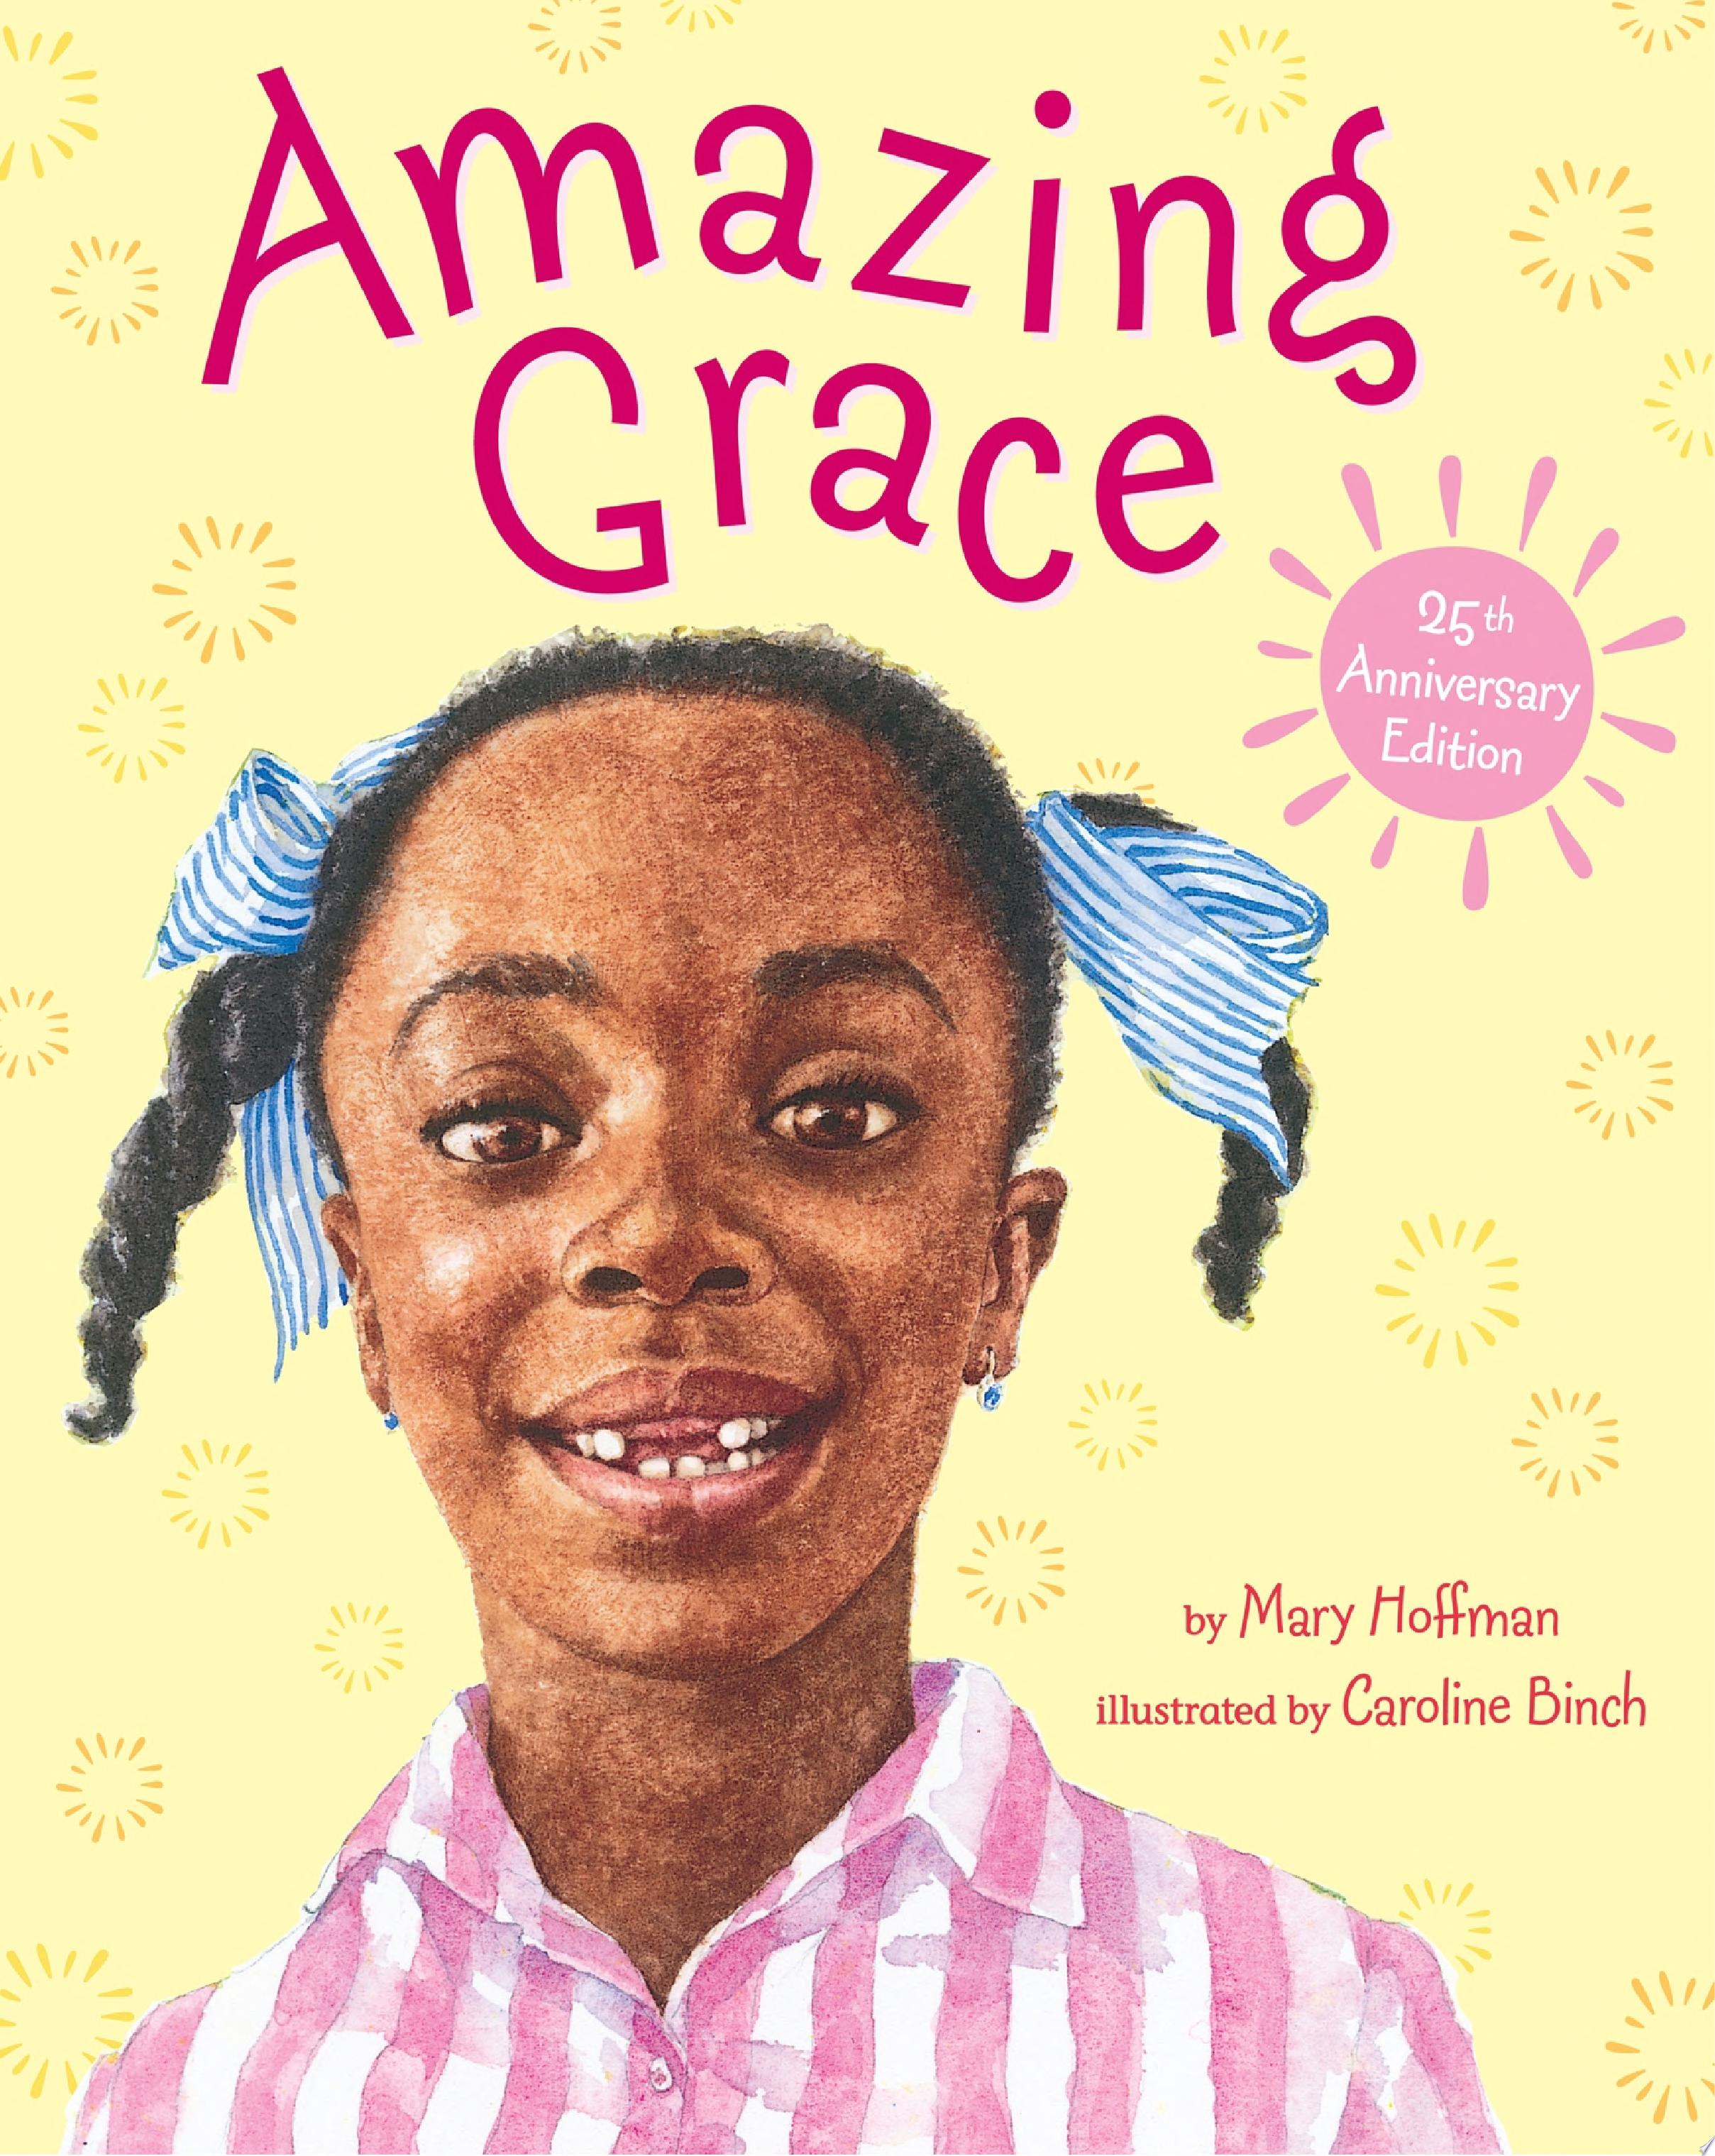 Image for "Amazing Grace"